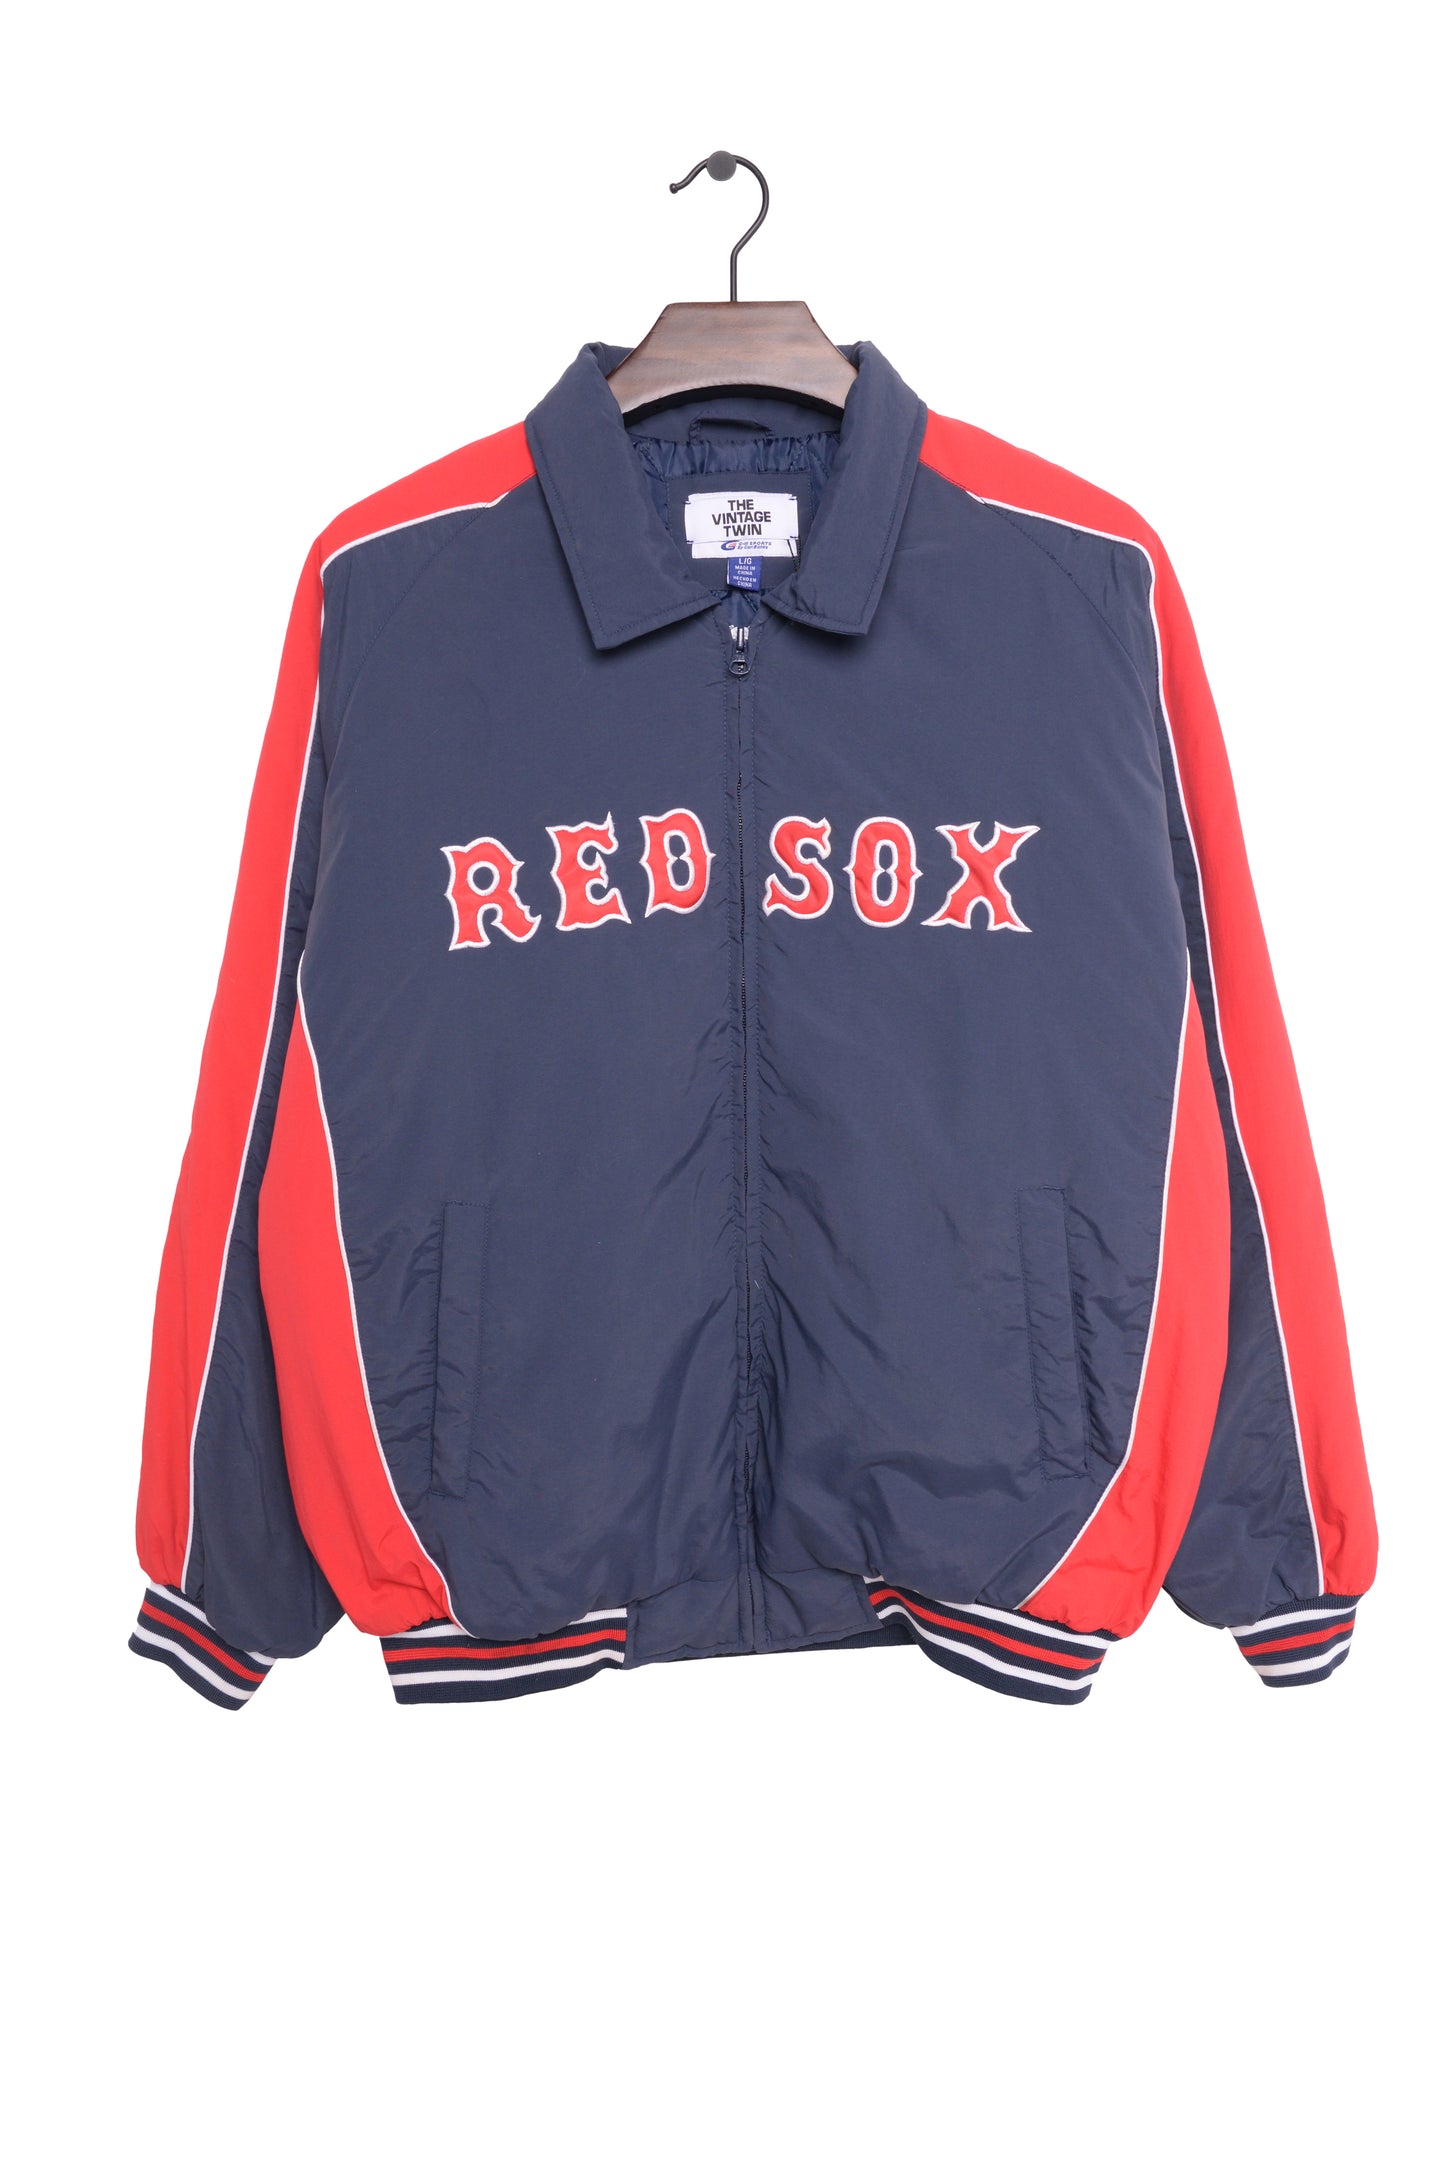 Boston Red Sox Puffer Jacket